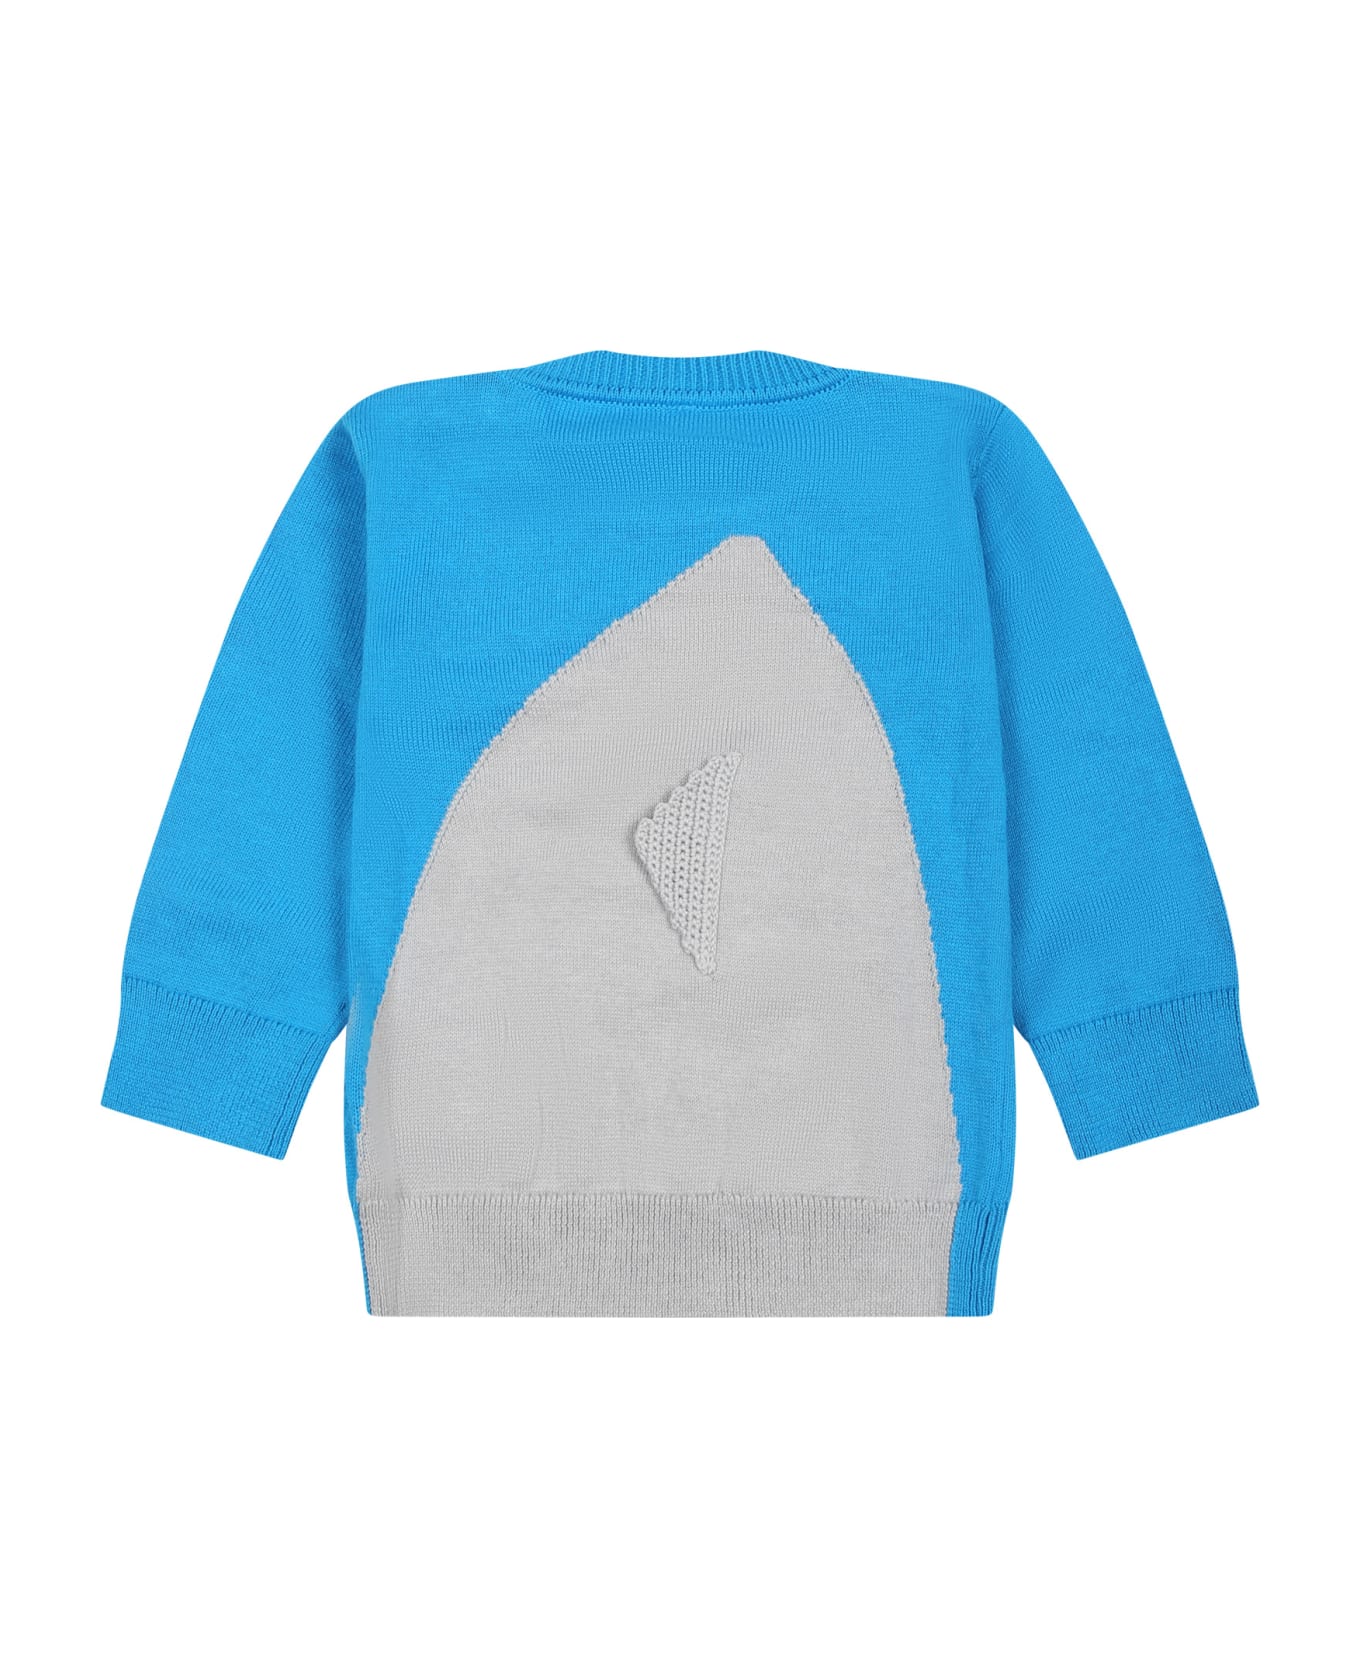 Stella McCartney Kids Light Blue Sweater For Baby Boy With Shark - Light Blue